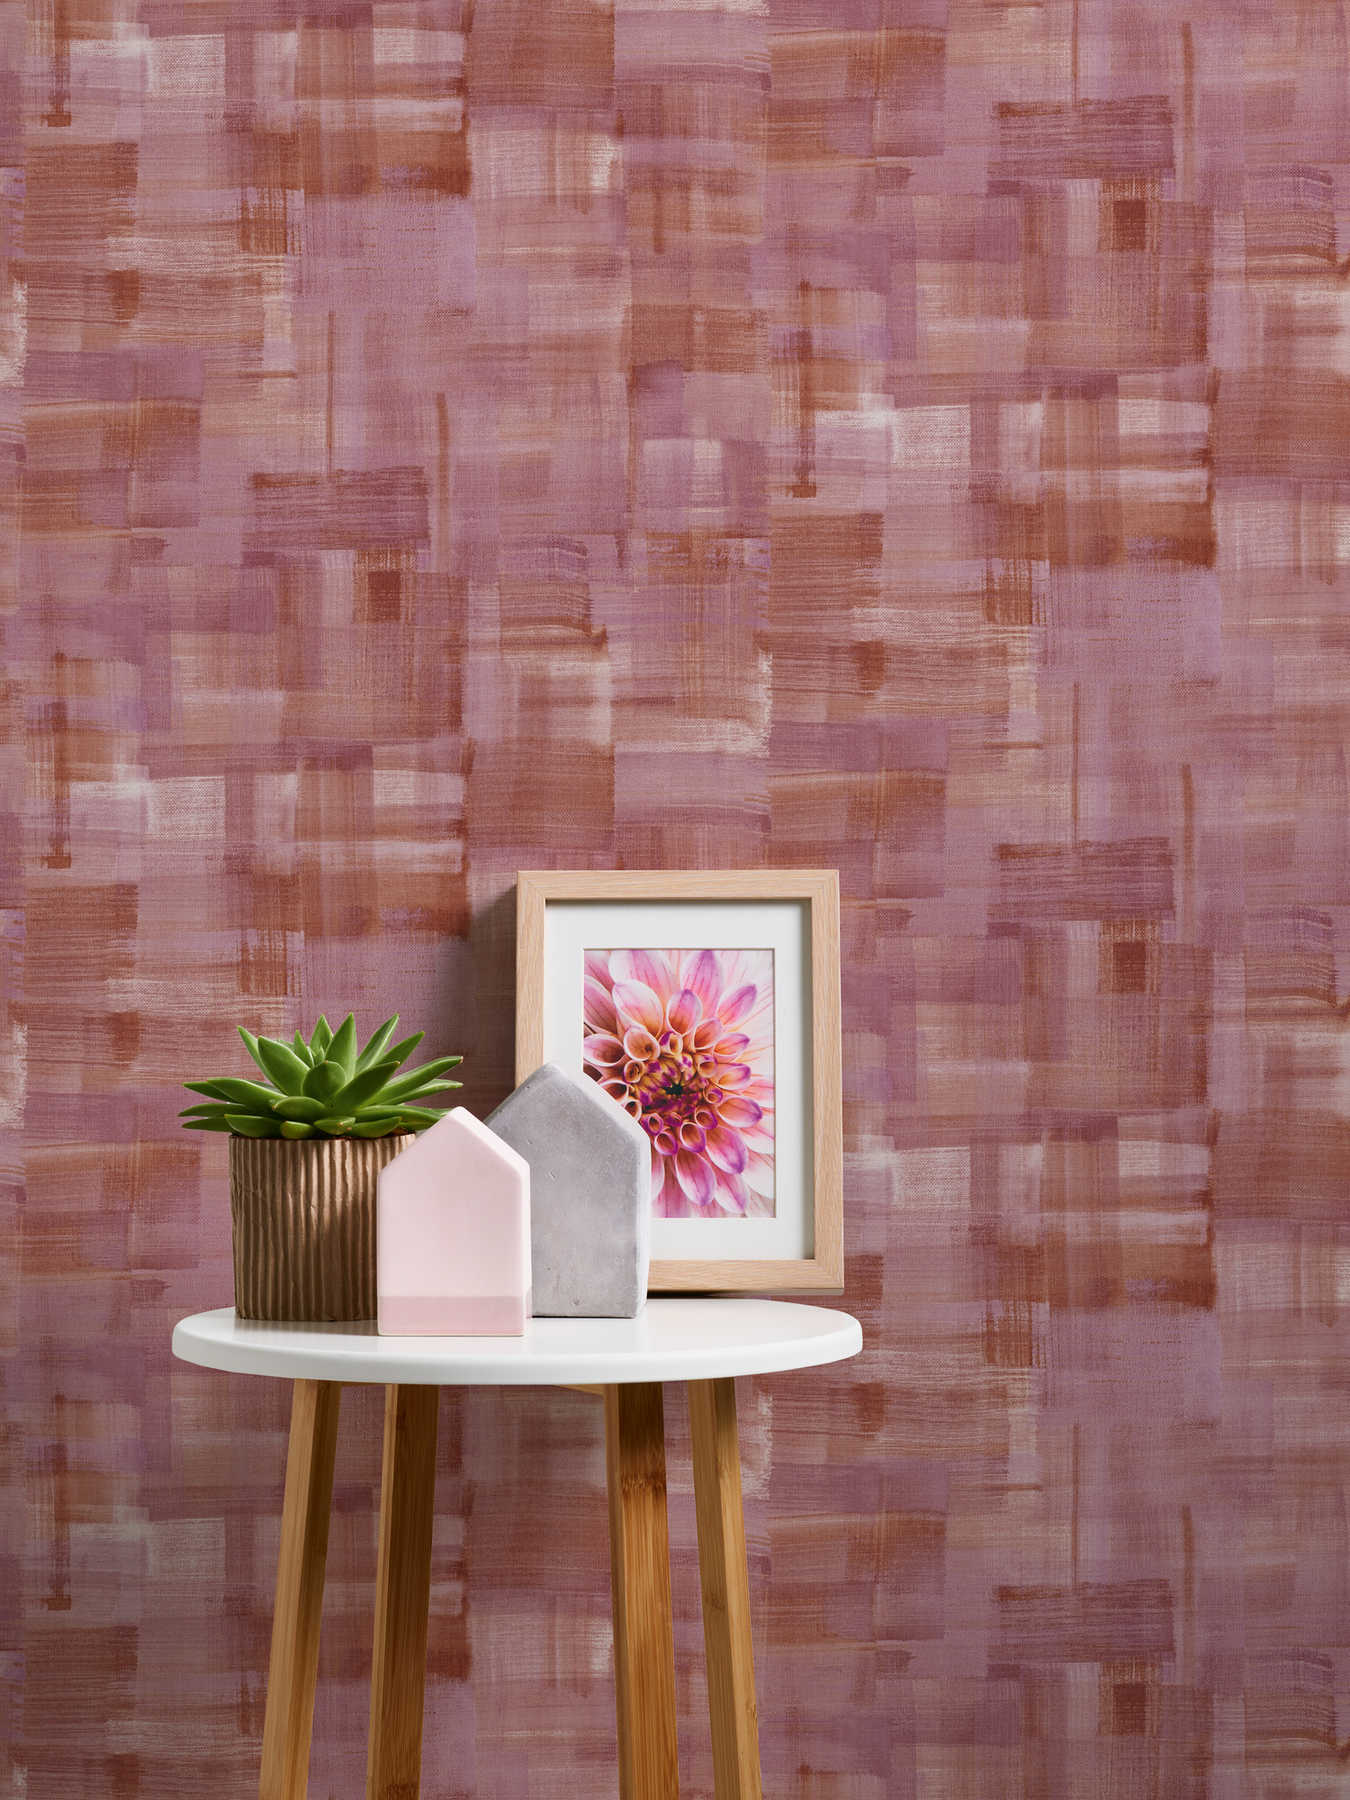             Wallpaper brushstroke design & canvas texture - red, purple
        